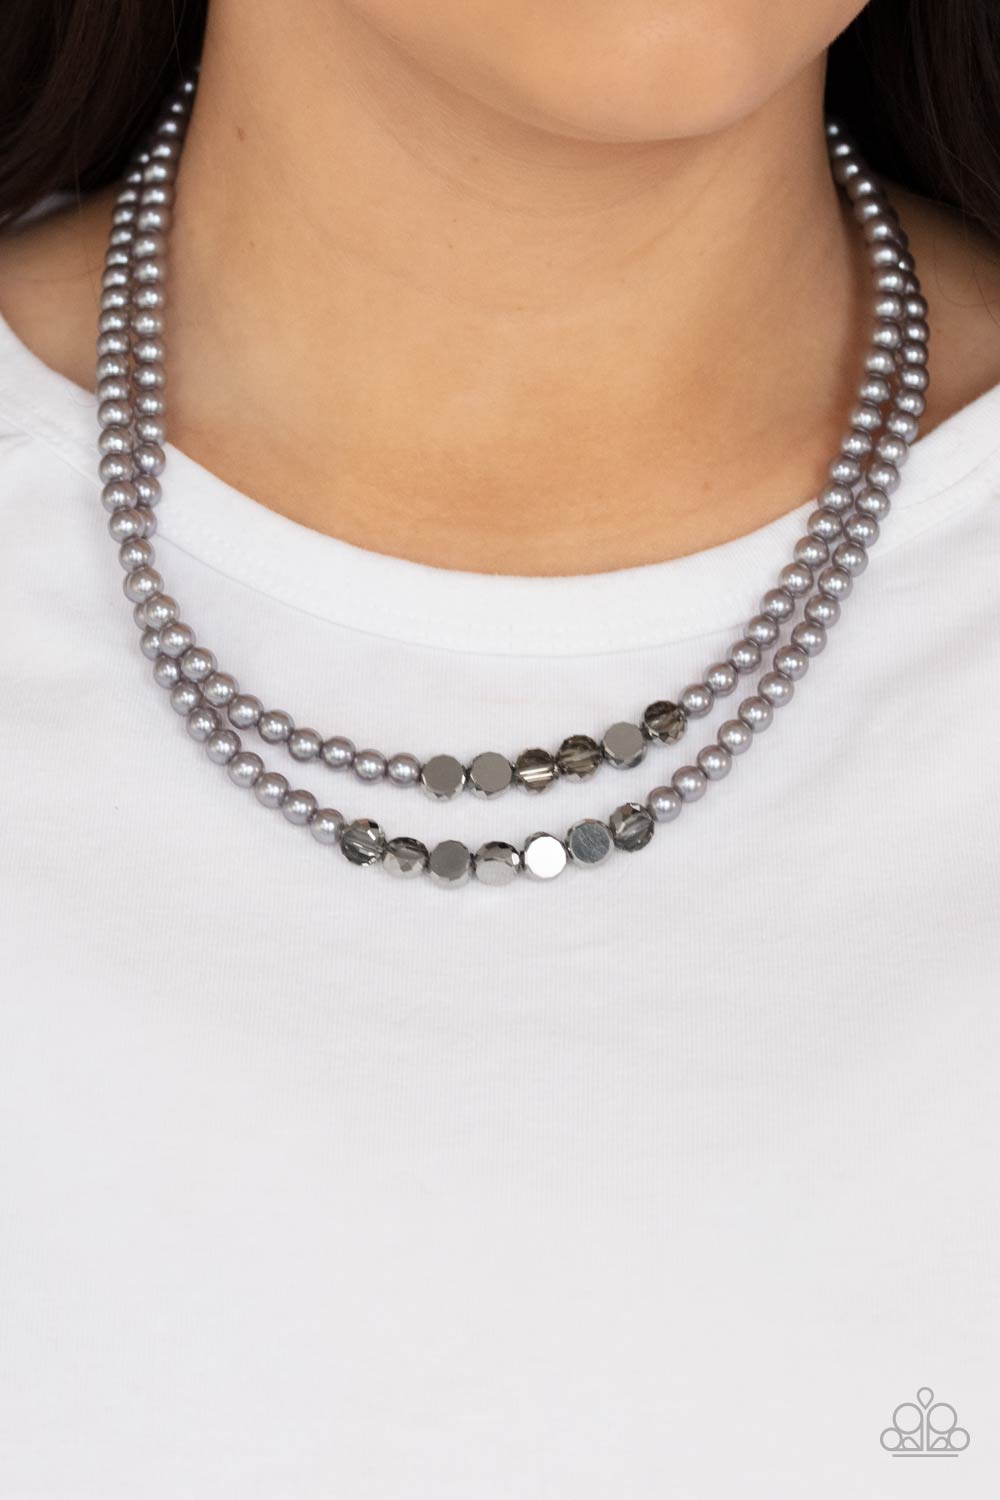 Poshly Petite - Silver Necklace Set - Princess Glam Shop